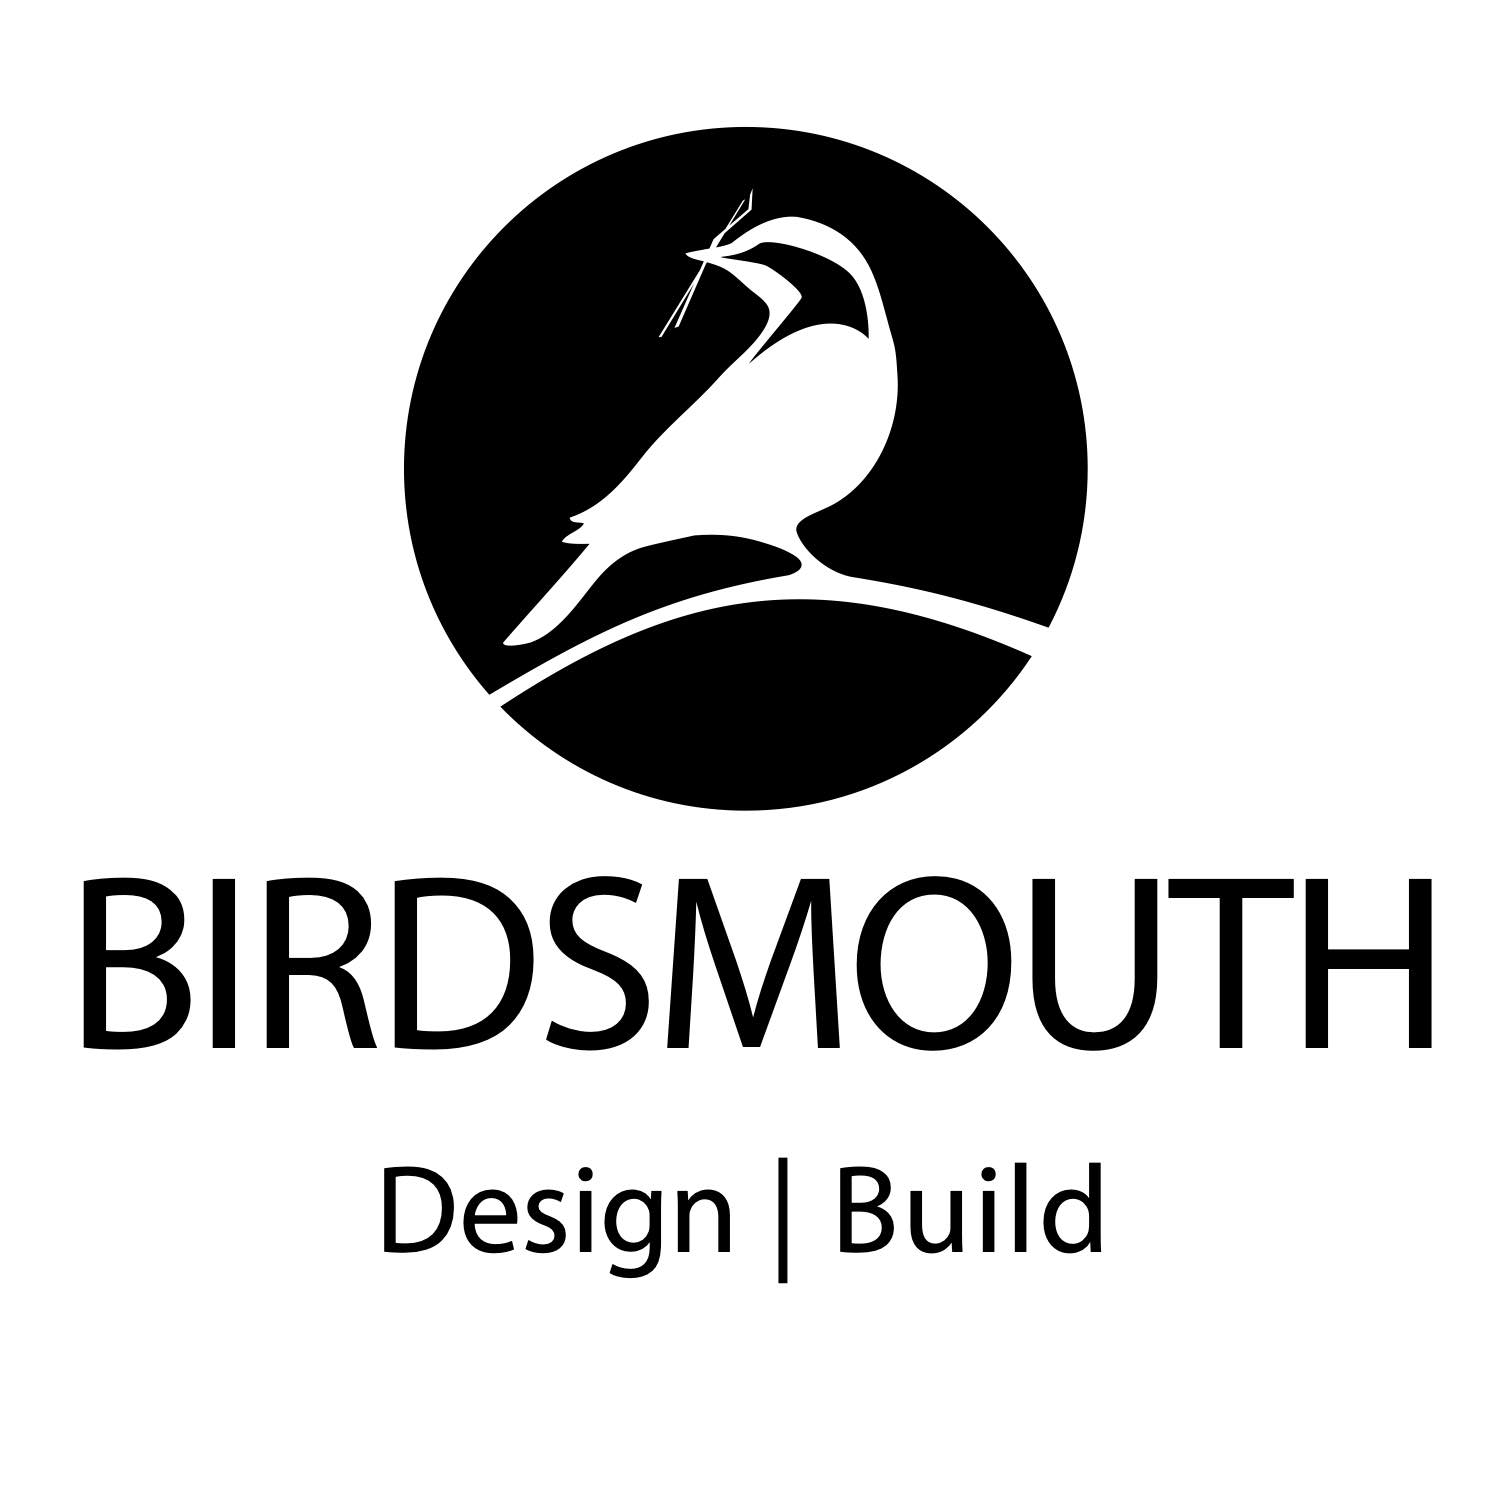 Birdsmouth Design-Build company logo